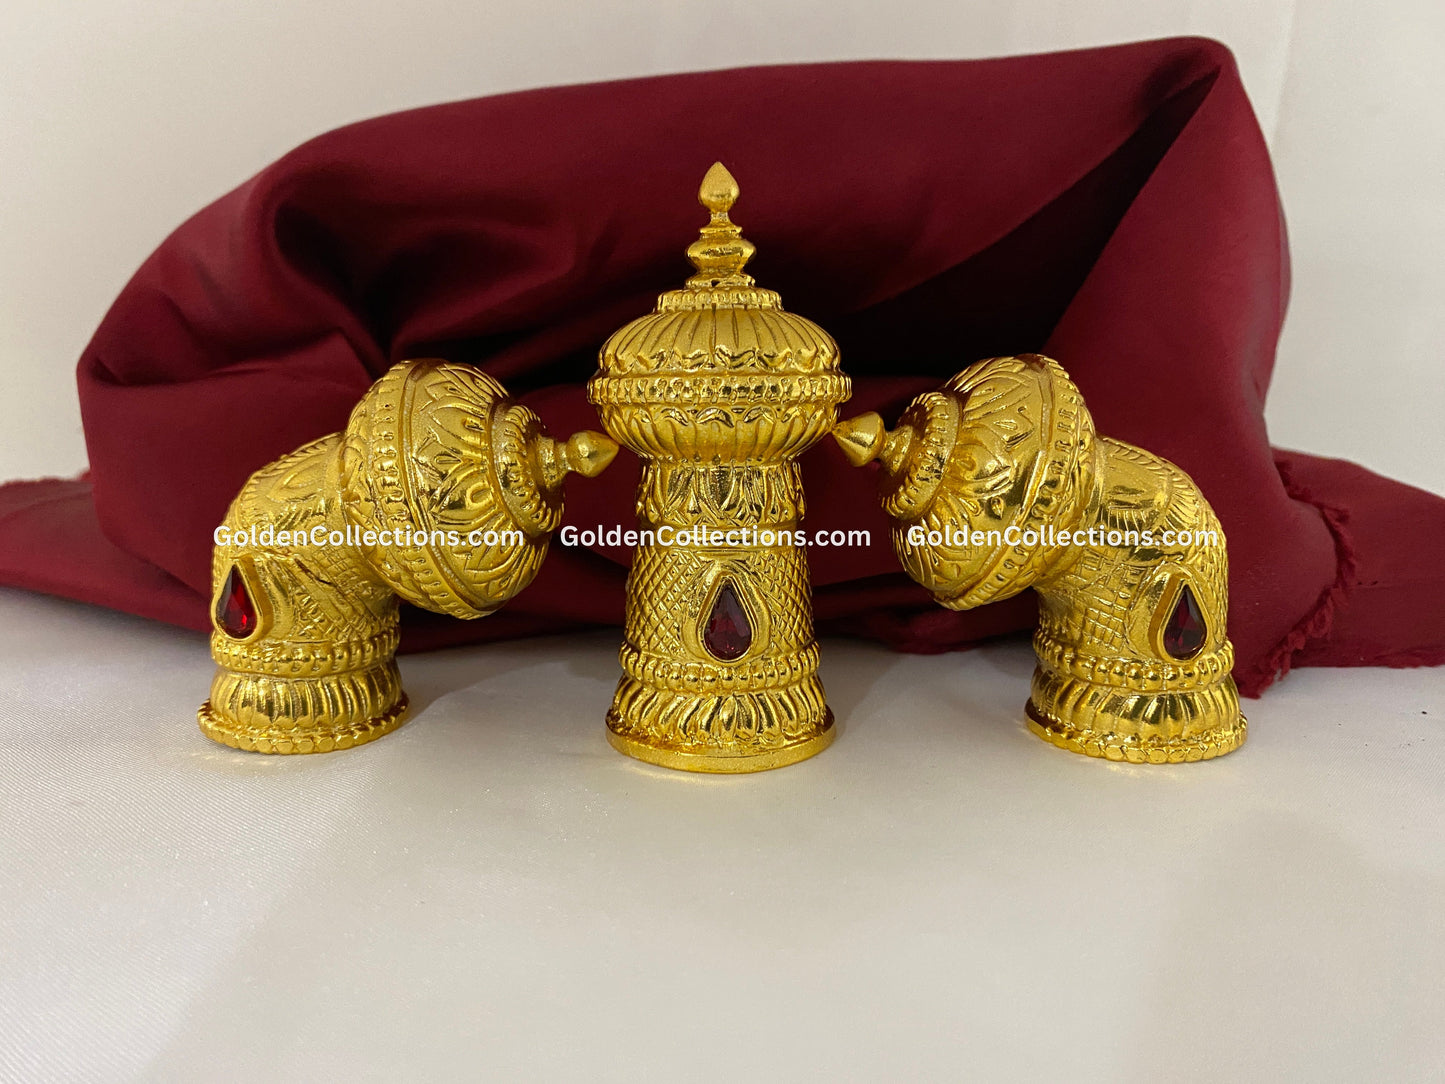 Hindu Deity Jewelry Crown Mukut - GoldenCollections DGC-007